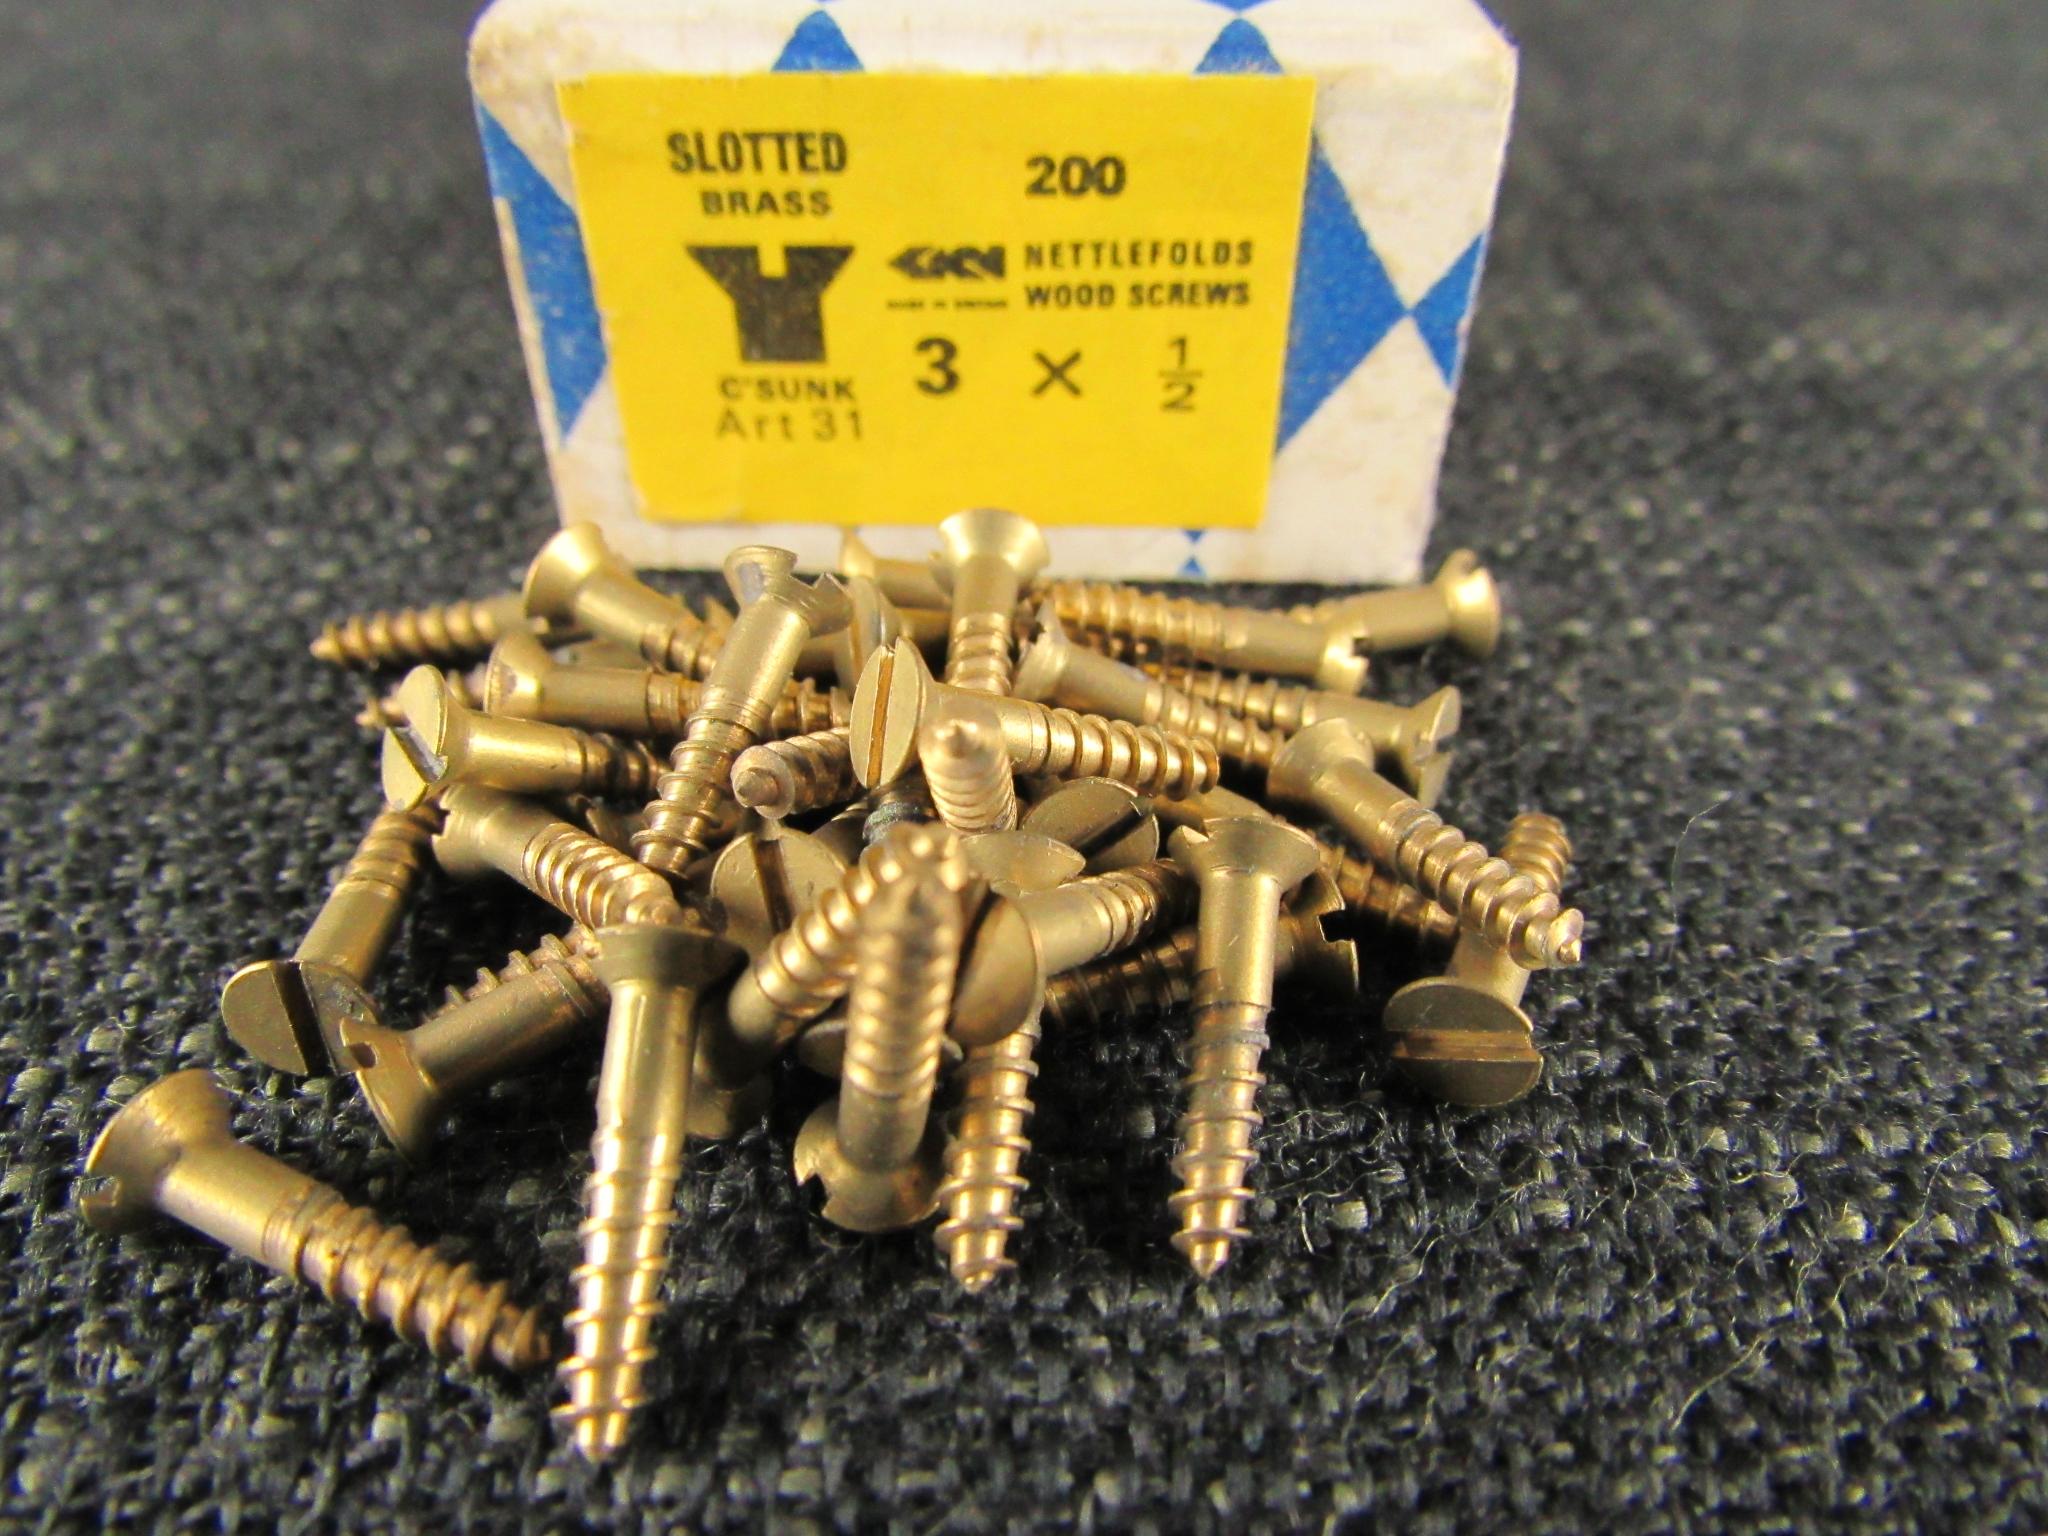 NETTLEFOLDS 3 x 1/2 CSK Slotted Brass Screws (Qty 25)